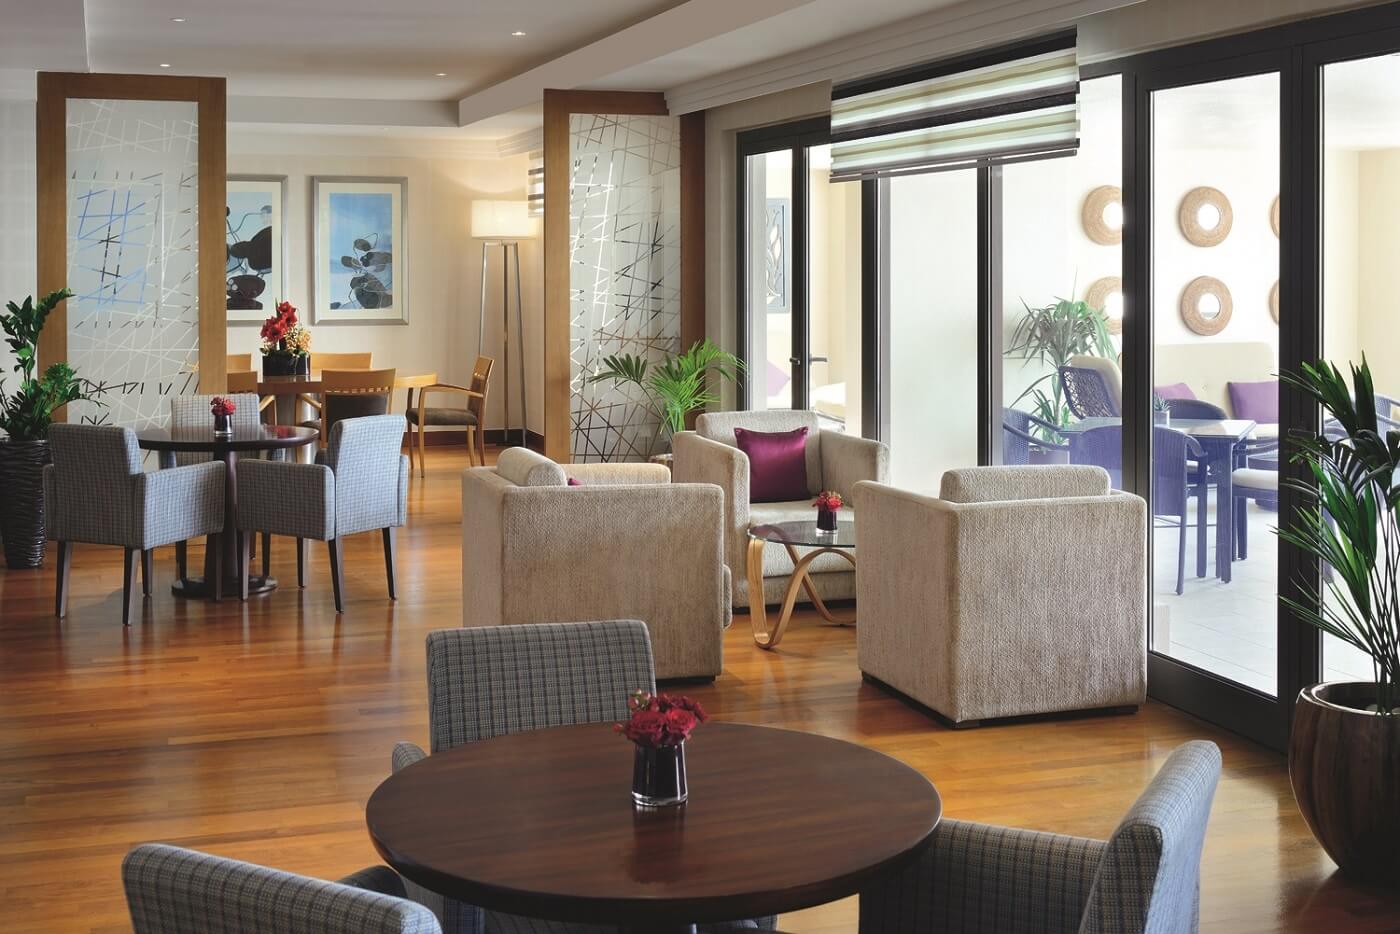 Movenpick Hotel Jumeirah Beach Executive Club Lounge Seating Area